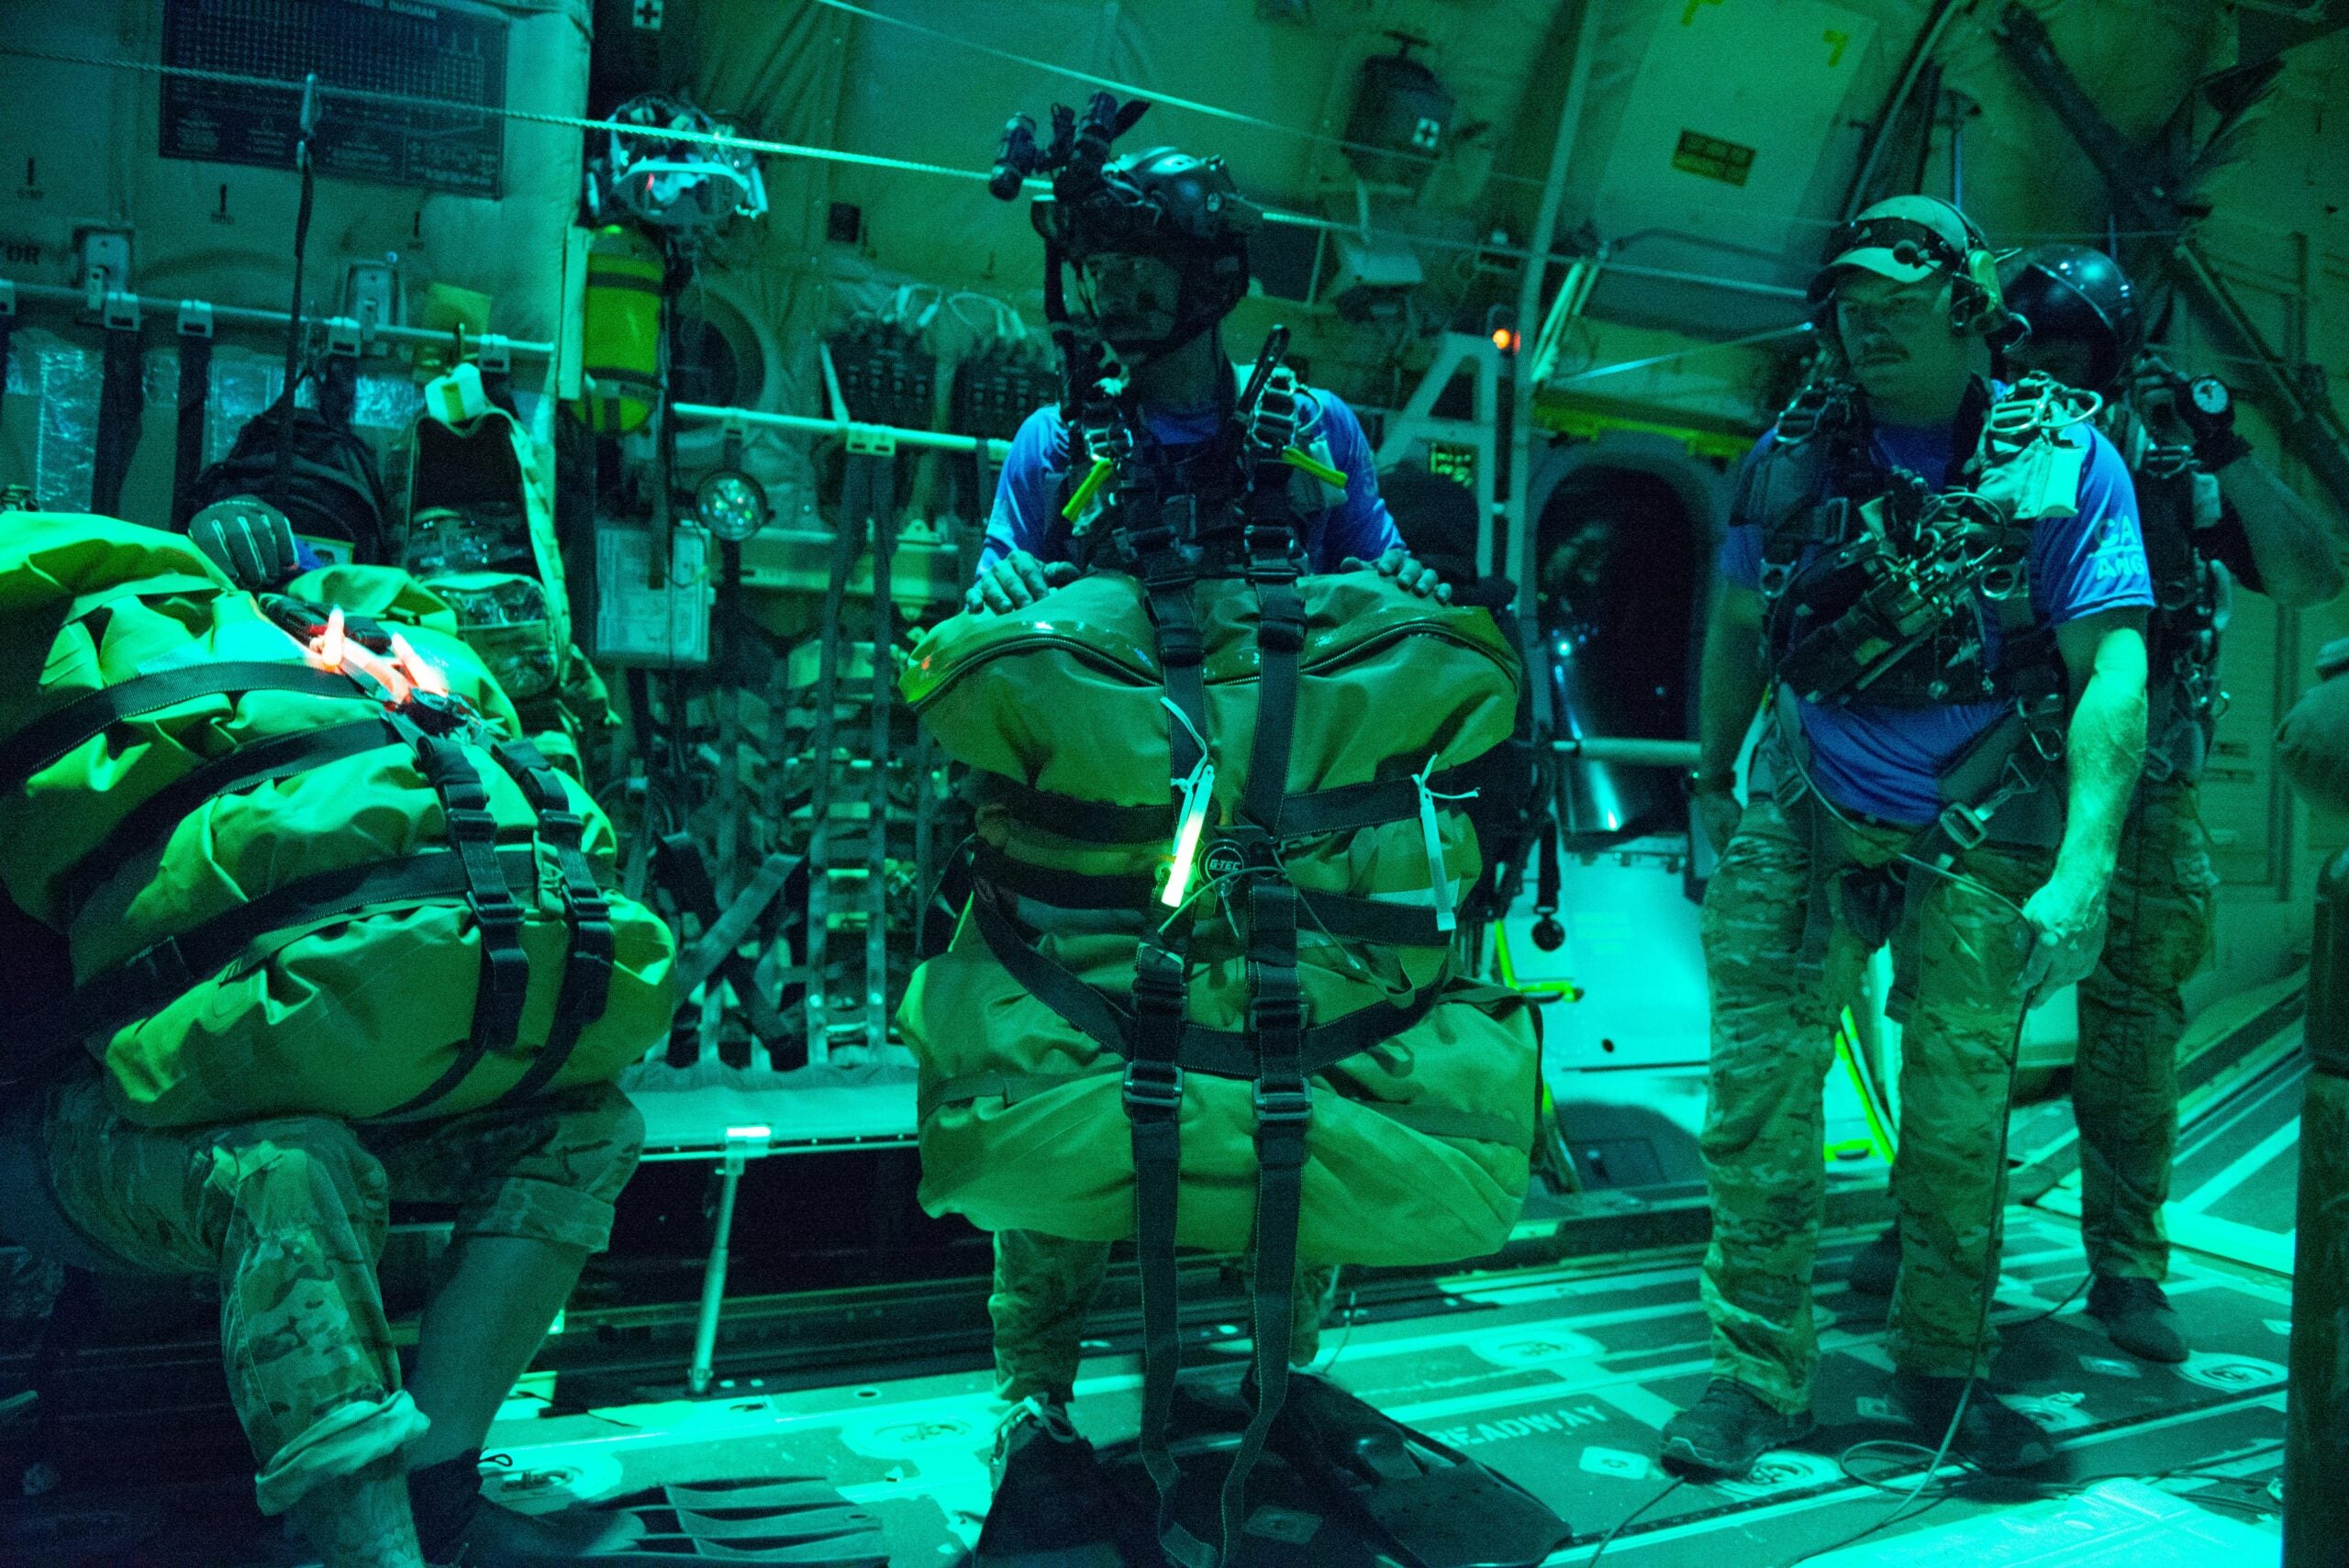 Survivor Tech Inside an Air Force PJ ocean rescue